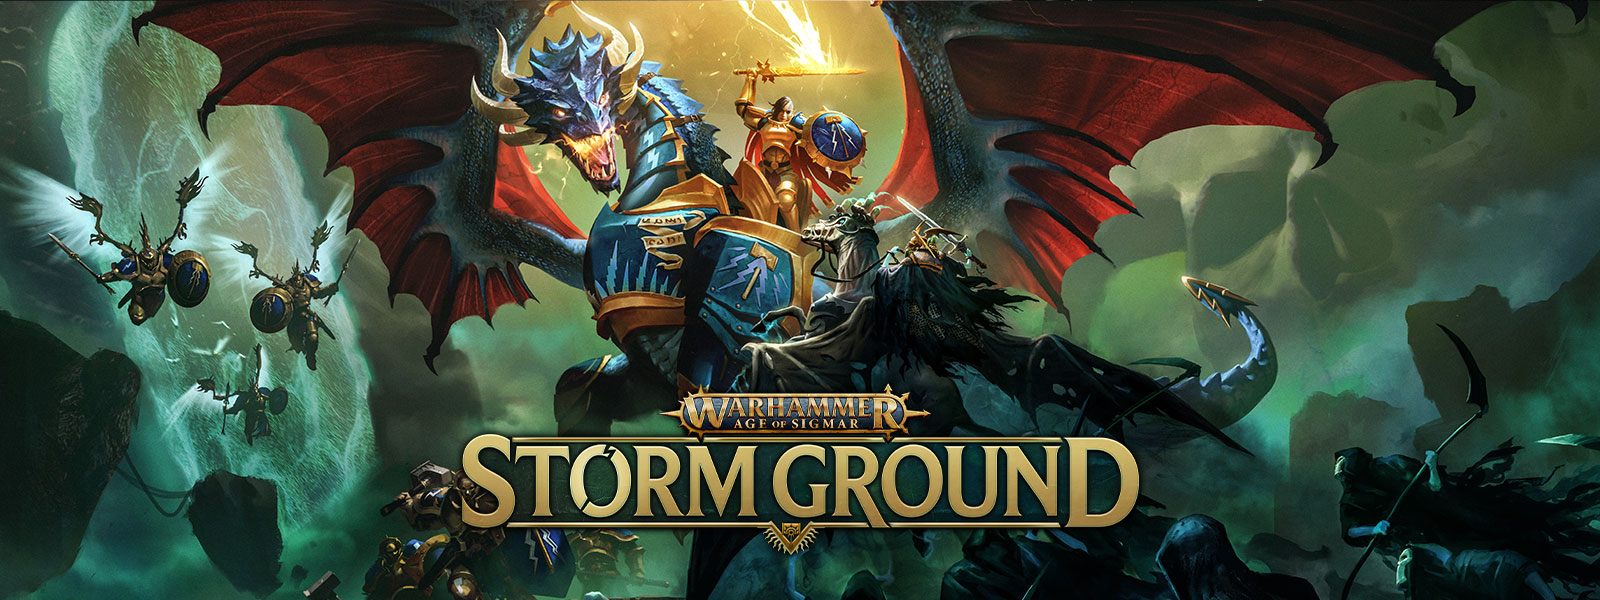 Warhammer Age of Sigmar: Storm Ground, bojovník na drakovi v zbroji bojuje s armádou kostier.